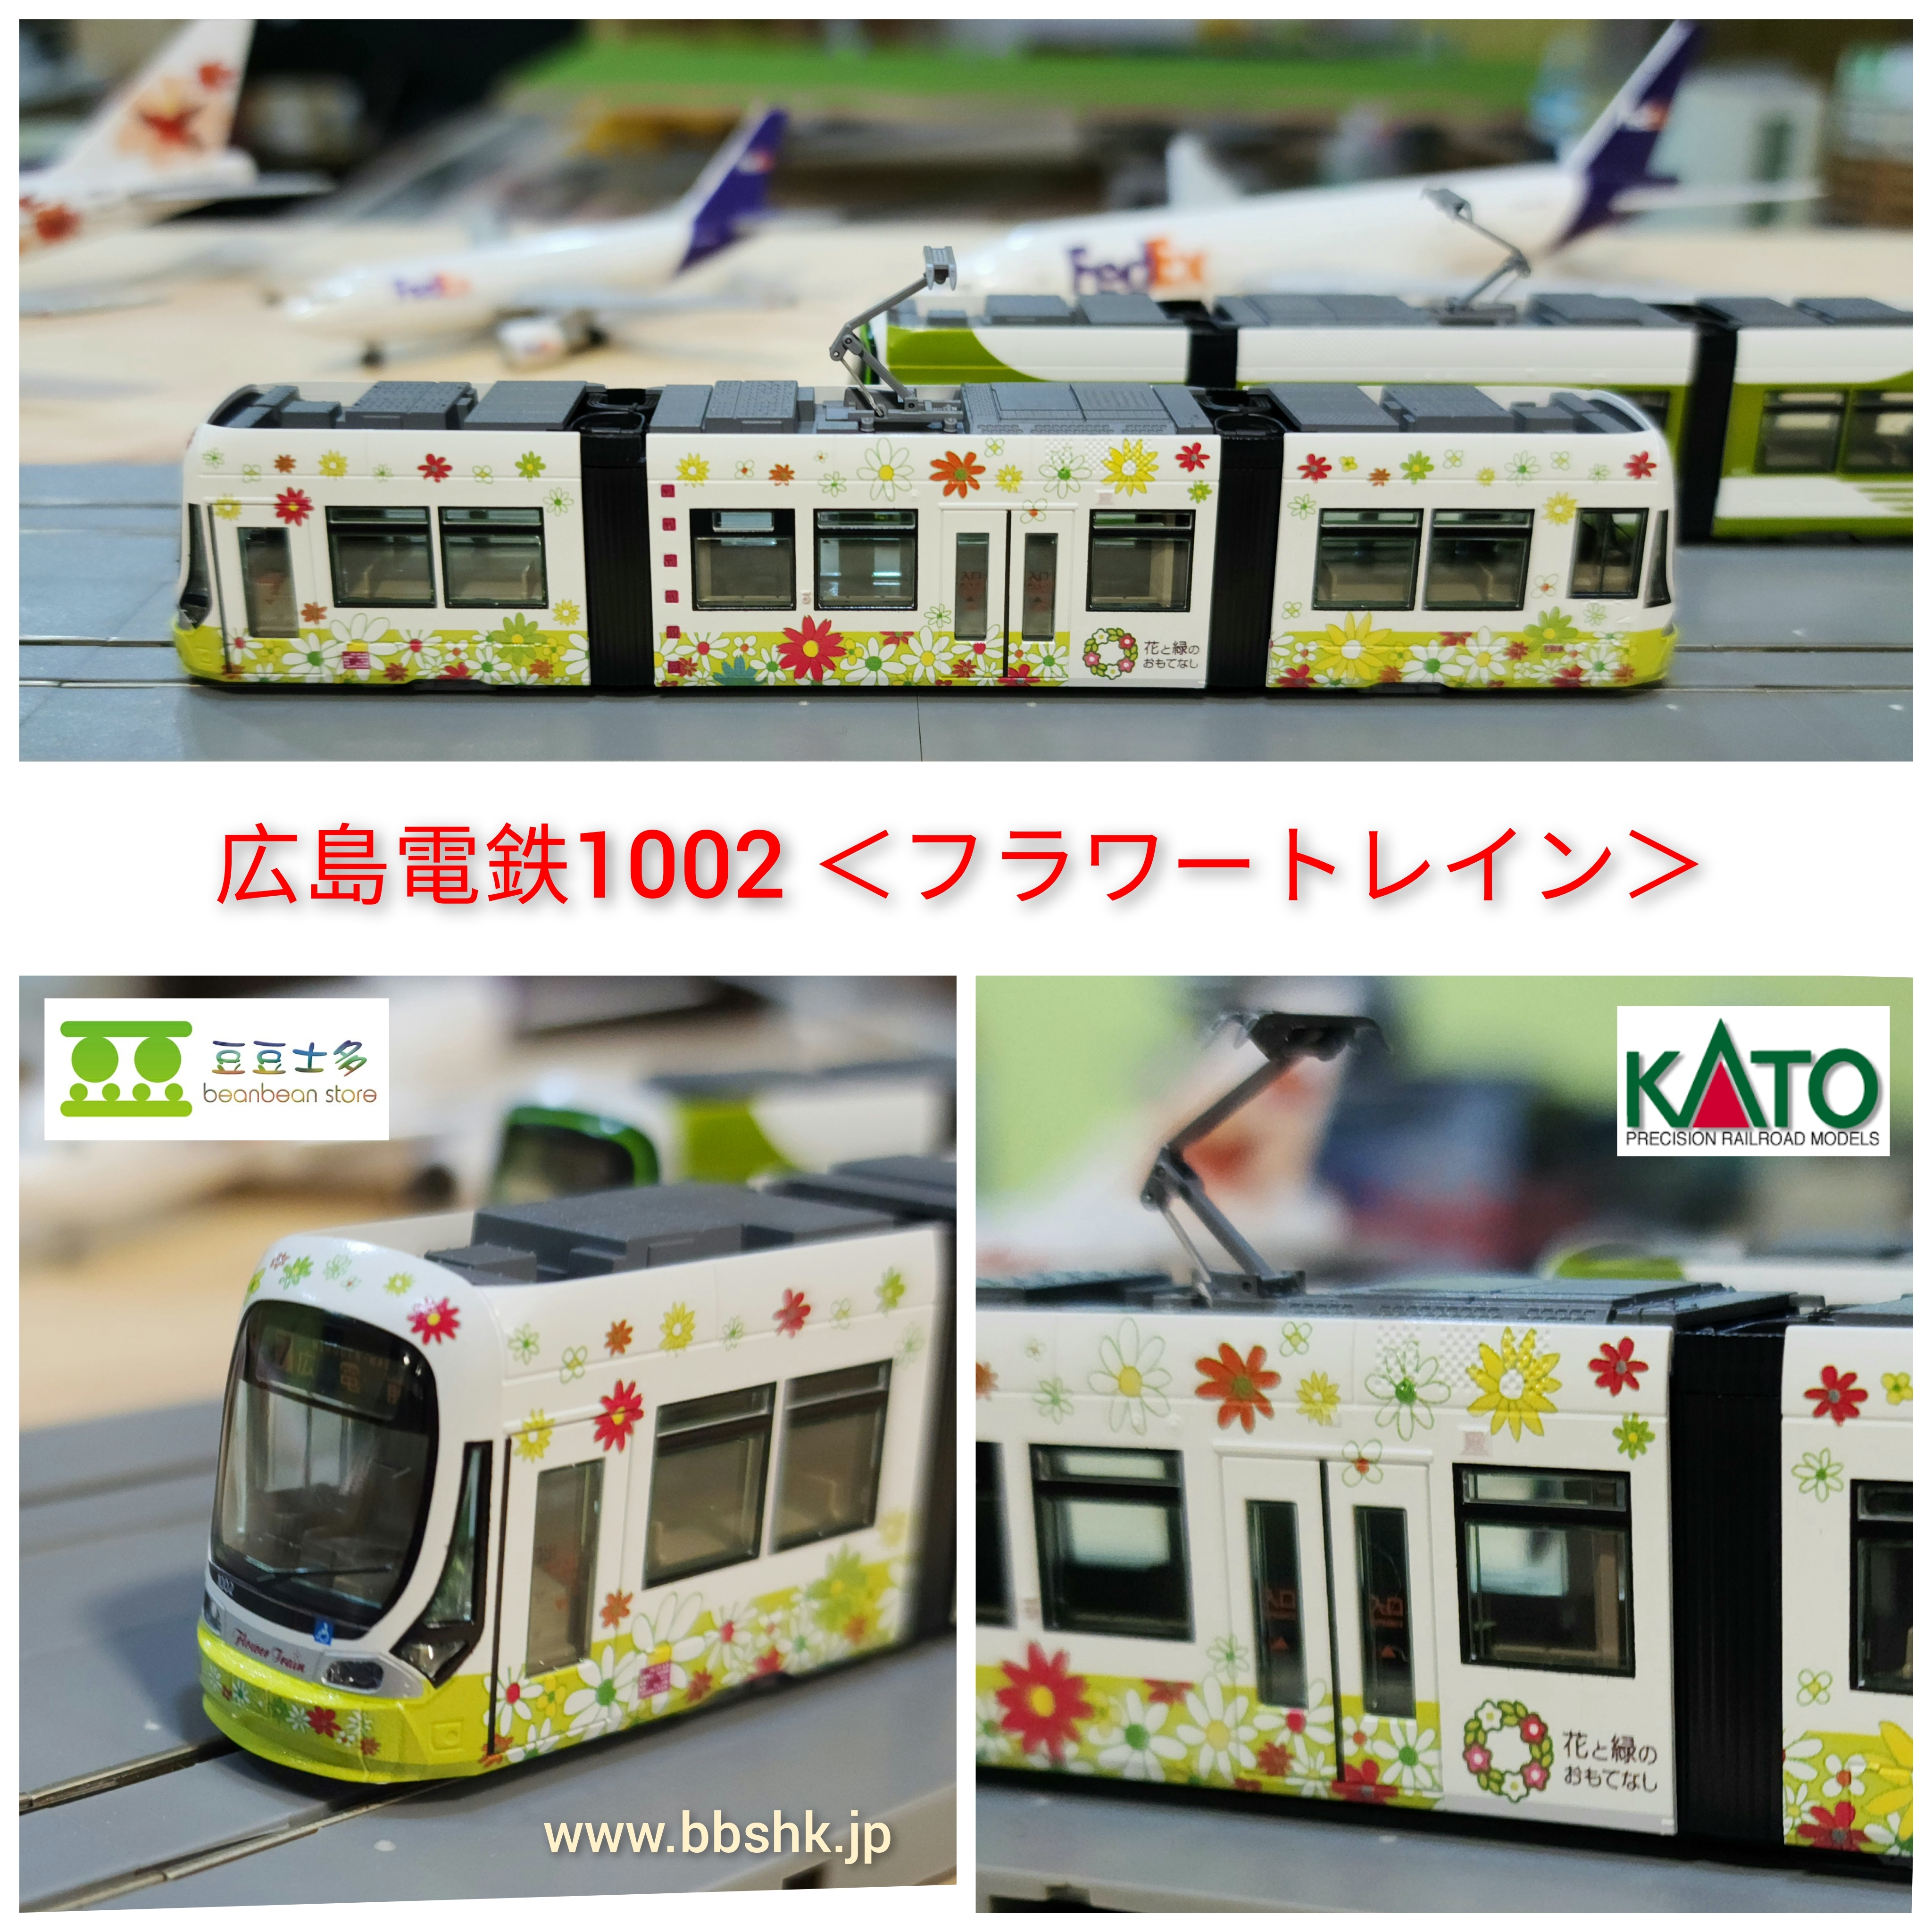 KATO 14-804-6【特別企画品】広島電鉄 1002<フラワートレイン>